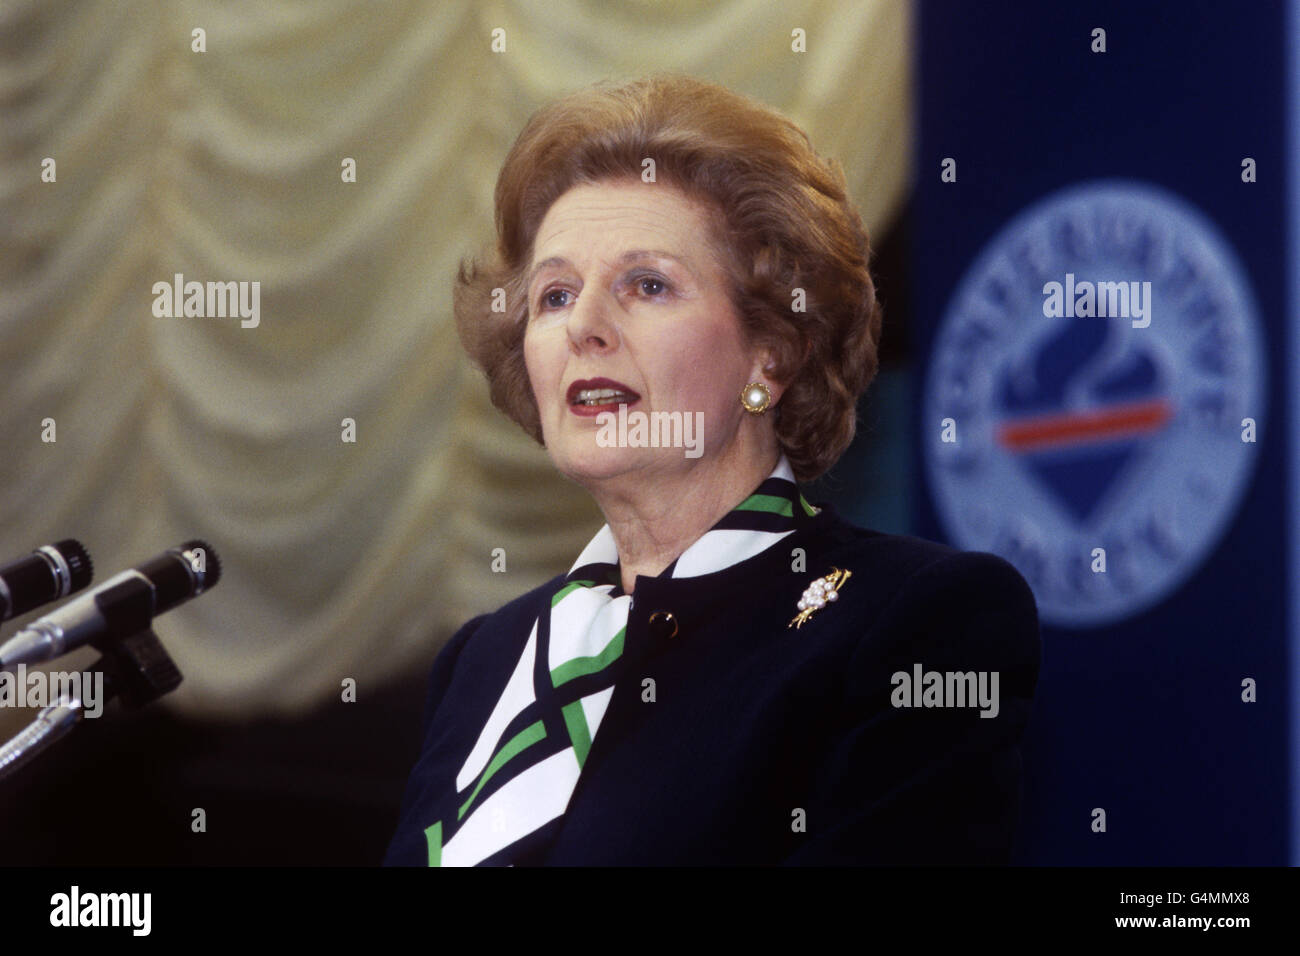 Politik - Margaret Thatcher - Keynote-Rede - konservative zentralen Rates Jahreskonferenz - Torquay Stockfoto